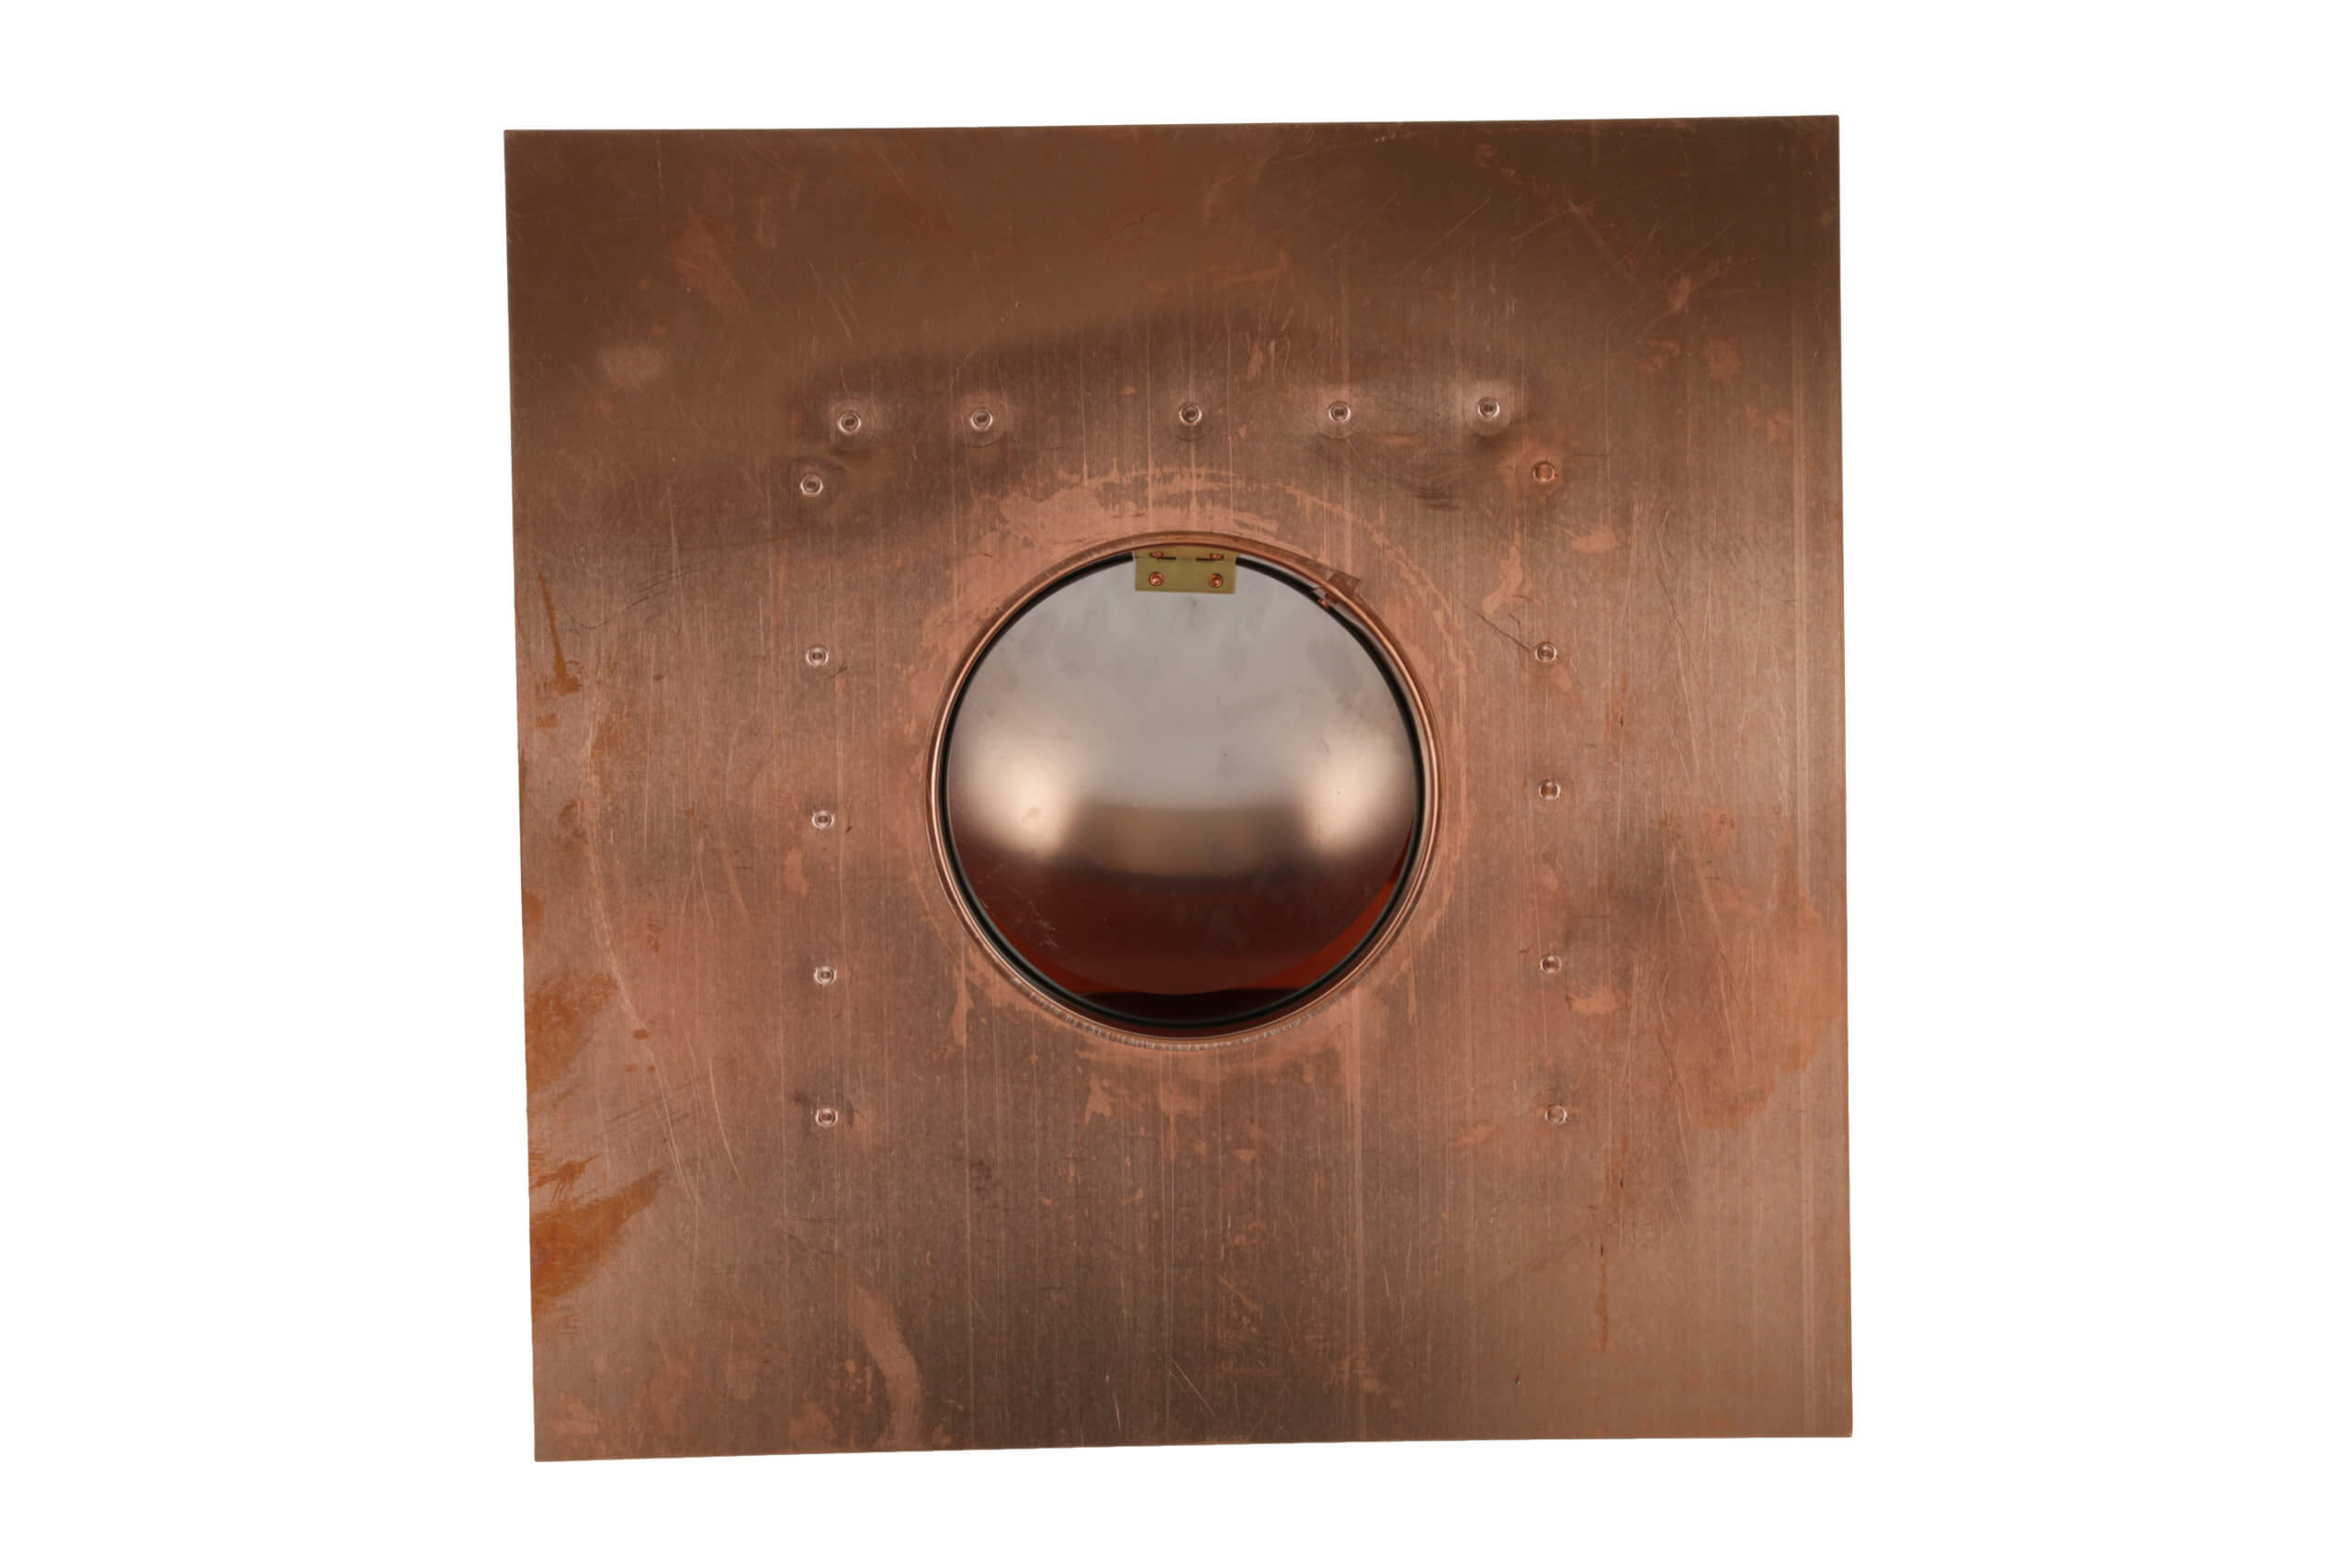 Bottom view of FAMCO Copper Bath Fan/Kitchen Exhaust.